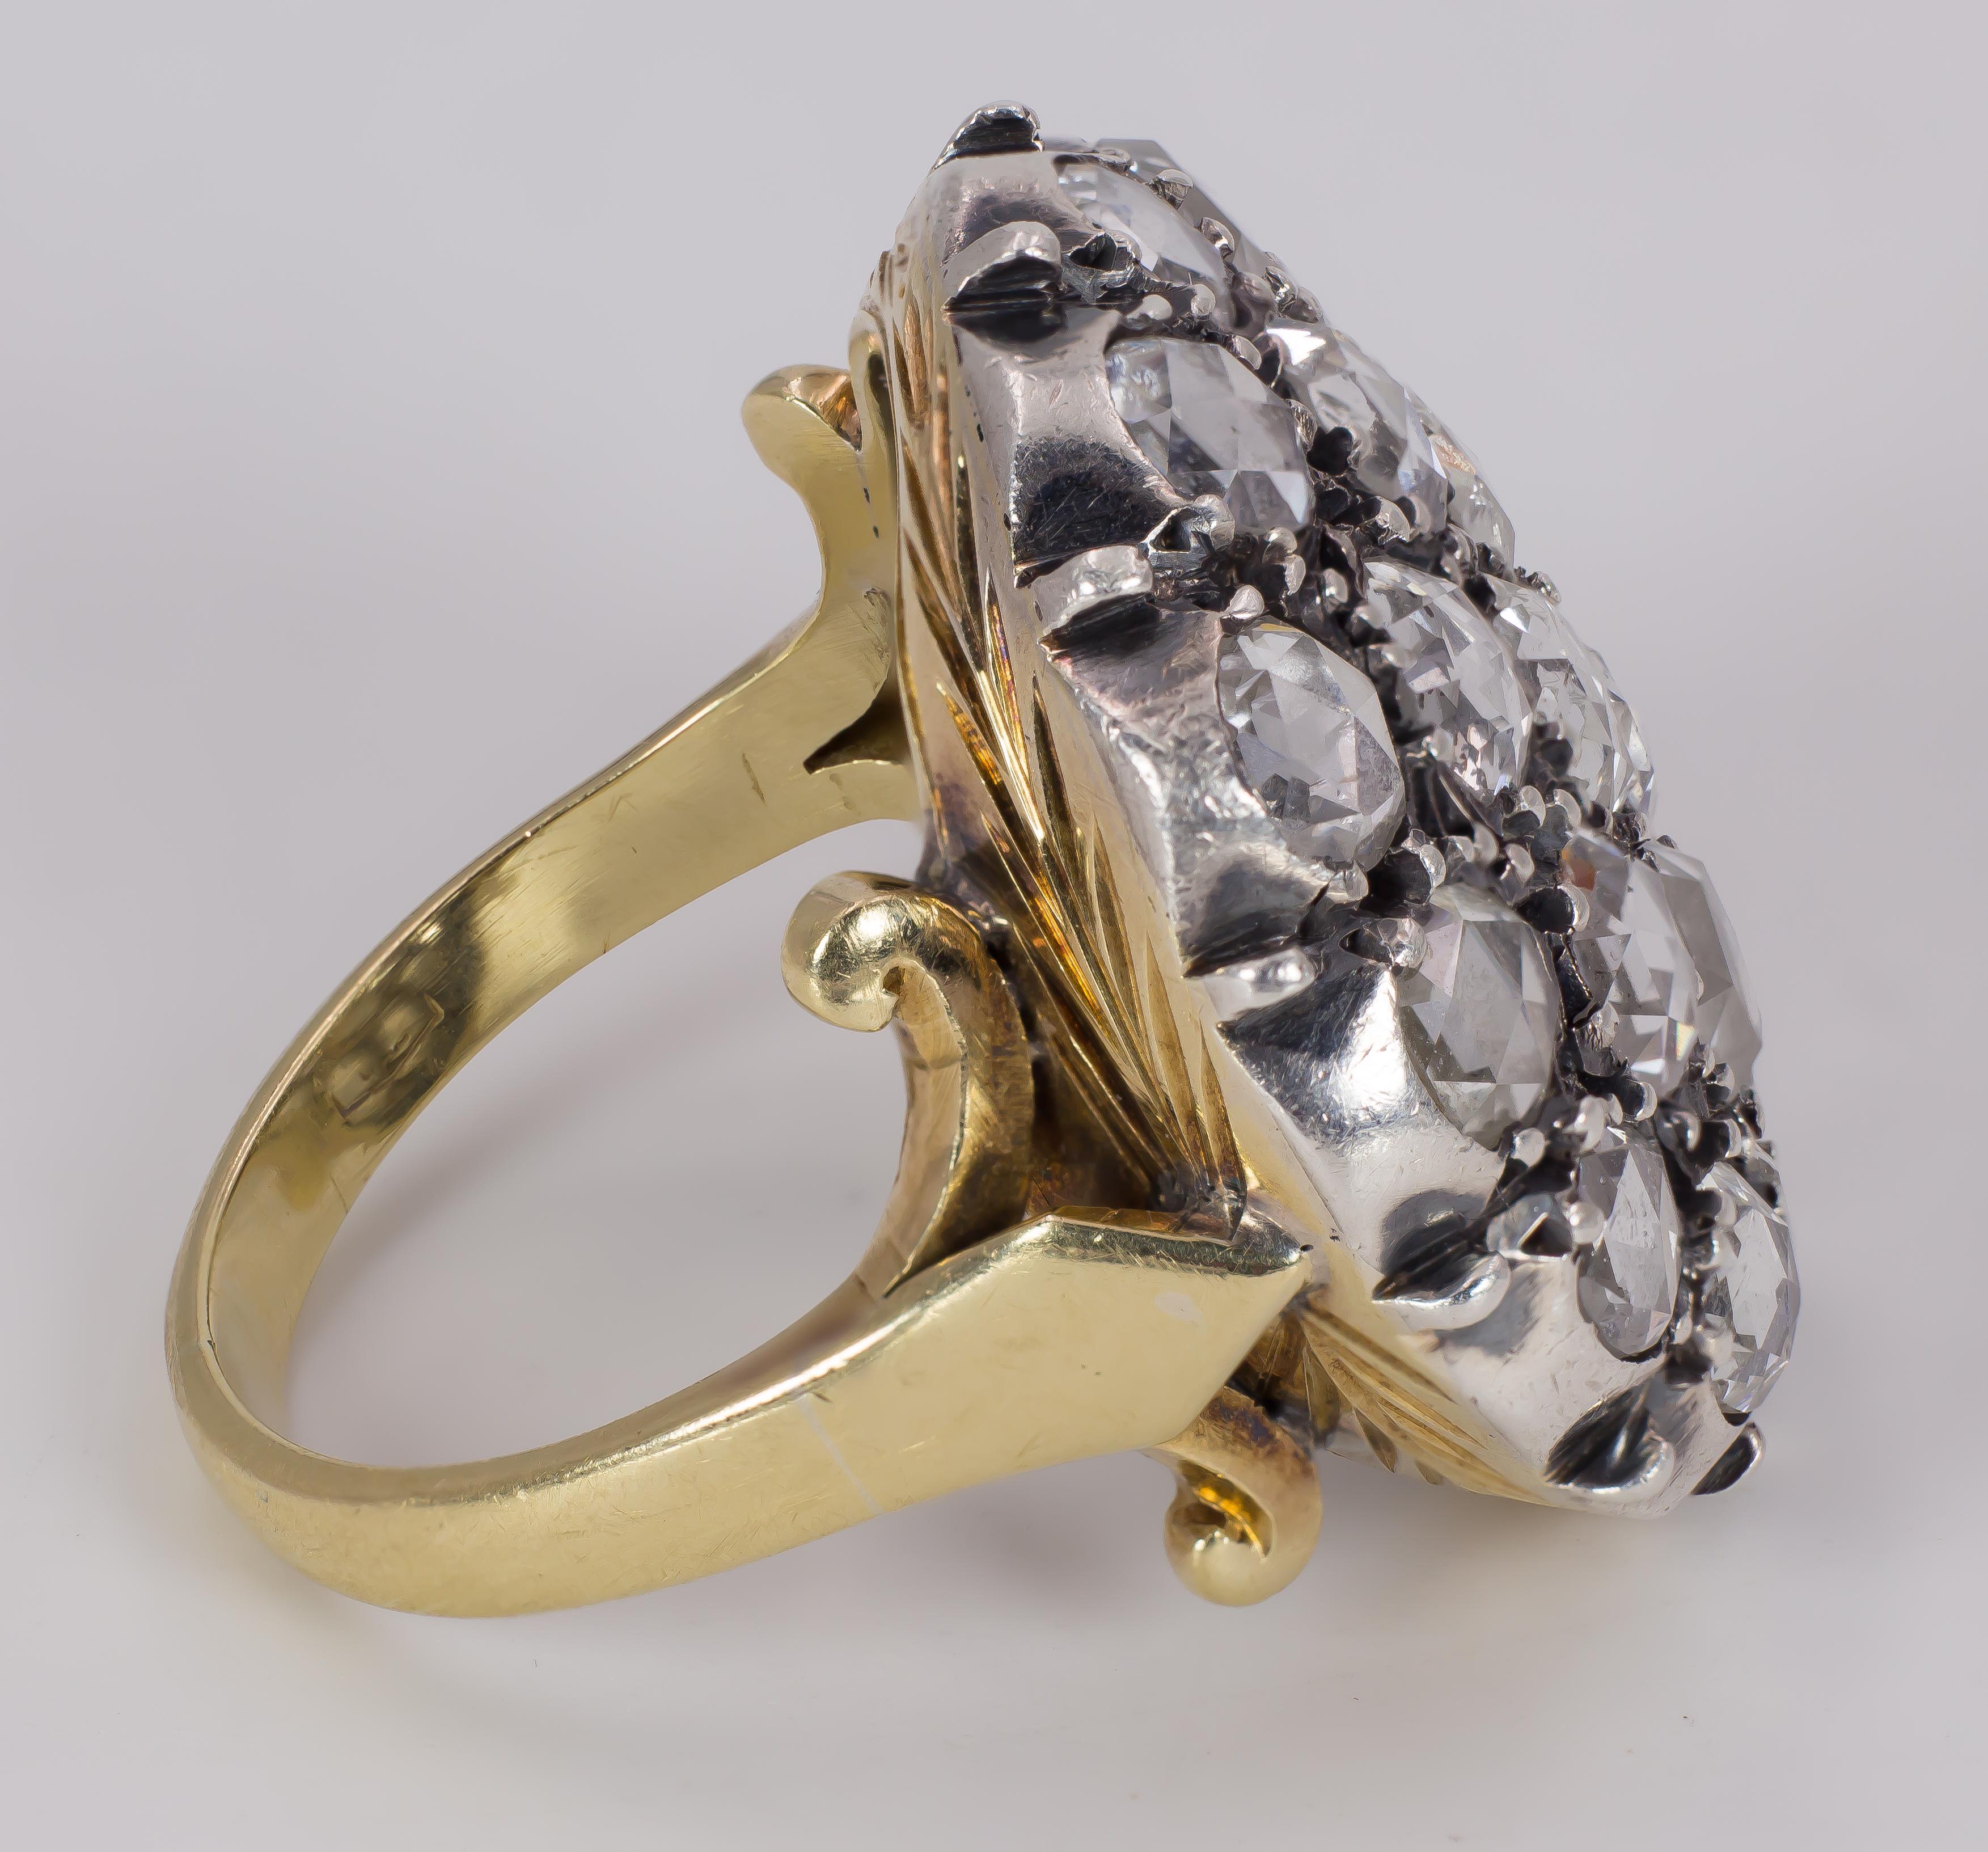 Rose Cut Antique 18 Karat Gold, Silver and 4 Carat Diamond Ring, Early 1900